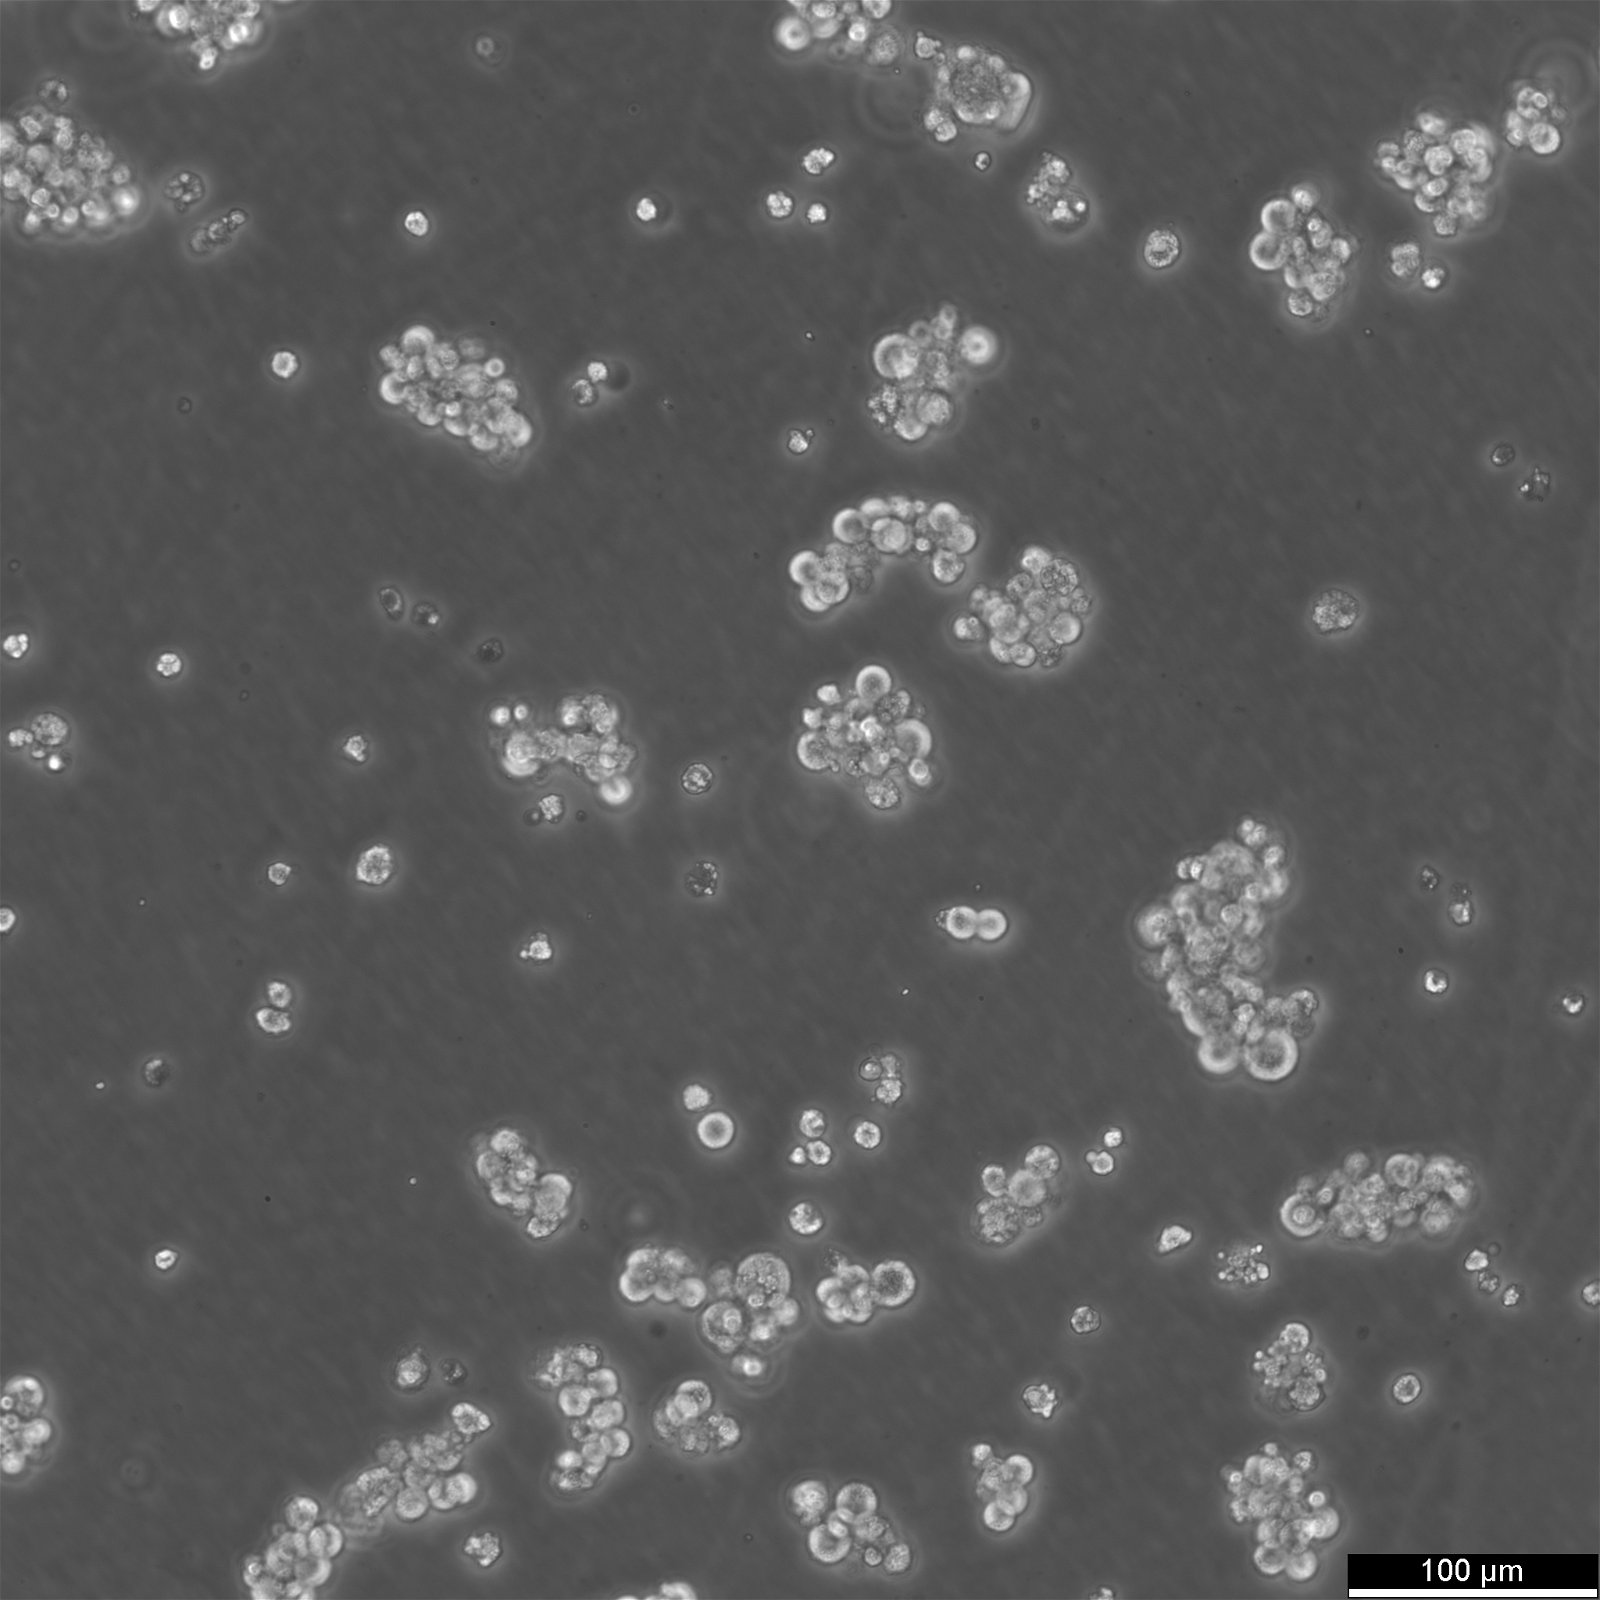 NCI-H716 Cells